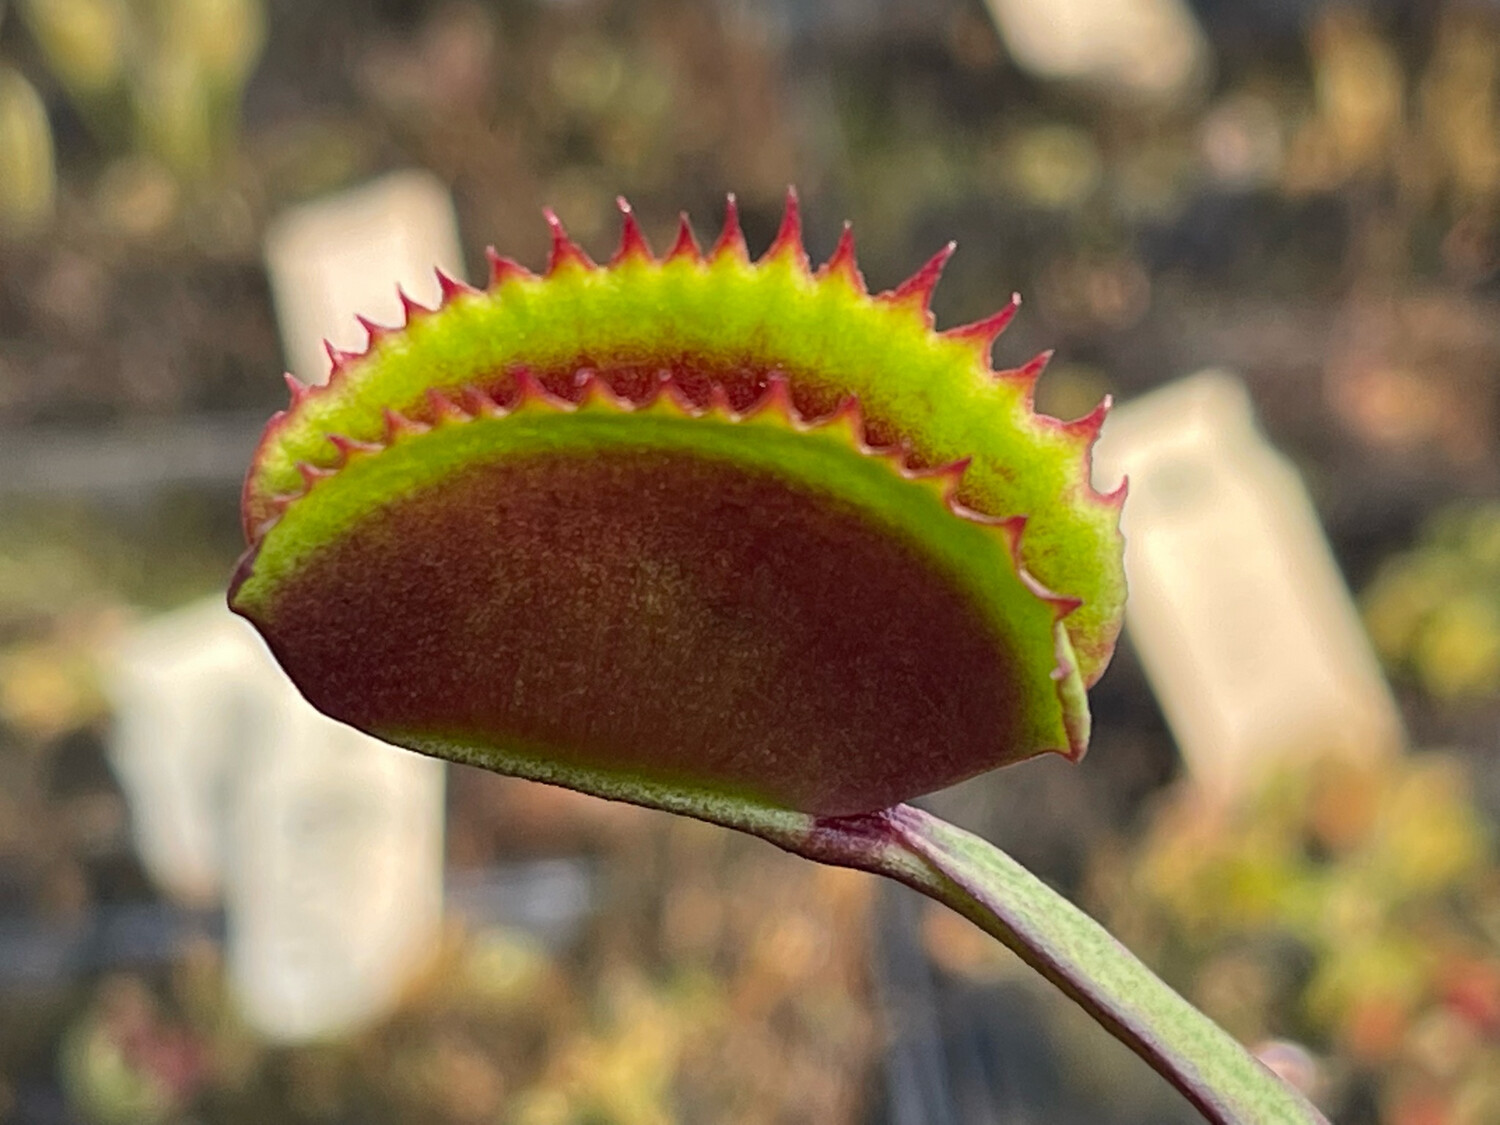 Dionaea muscipula “Red Piranha” Venus Flytrap (small)